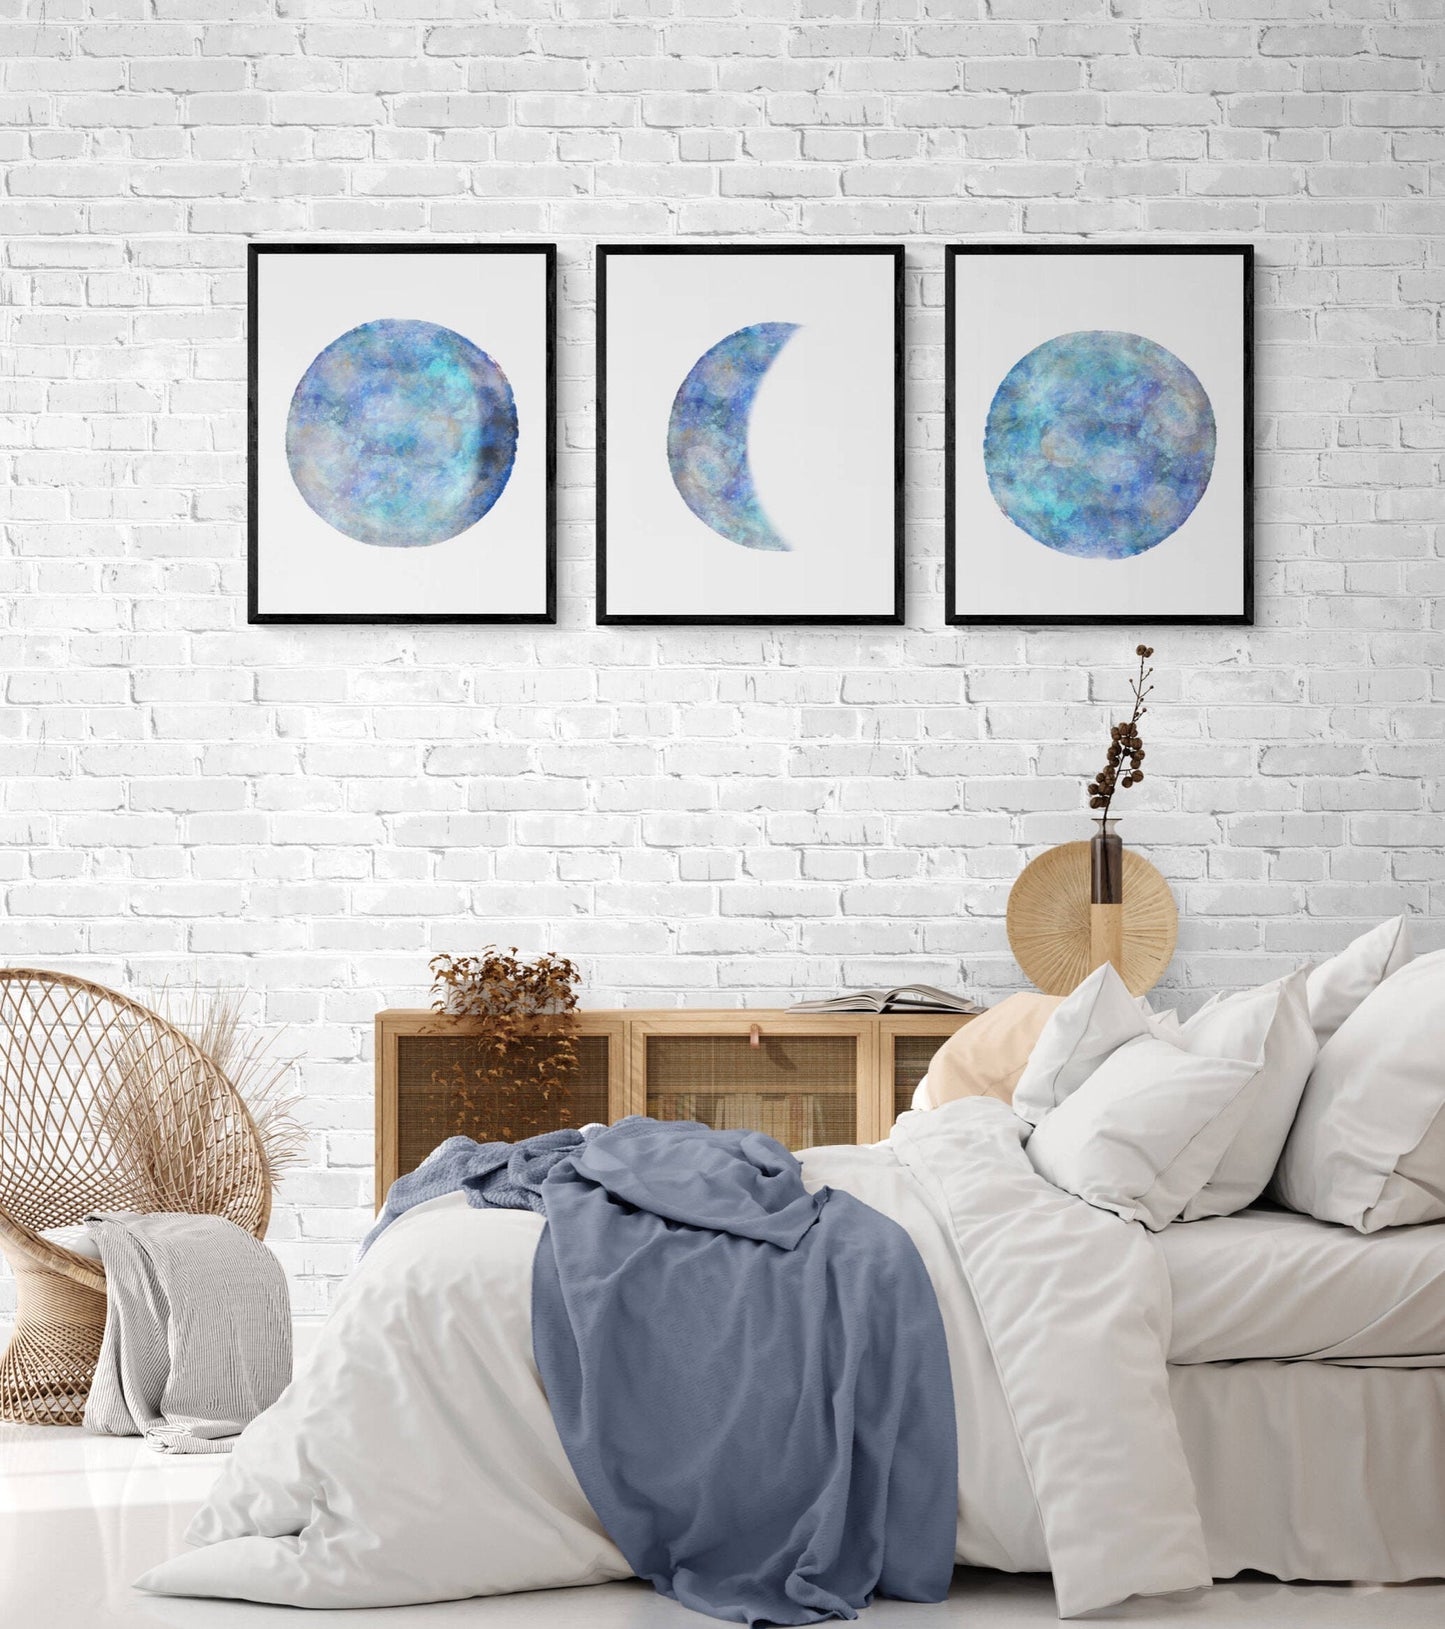 Moon Phases Set of 3 Print, Blue Indigo Moon Poster, Galaxy Artwork, Home Wall Decor, Modern Art, Bedroom Wall Decor, Lunar phase, Space Art